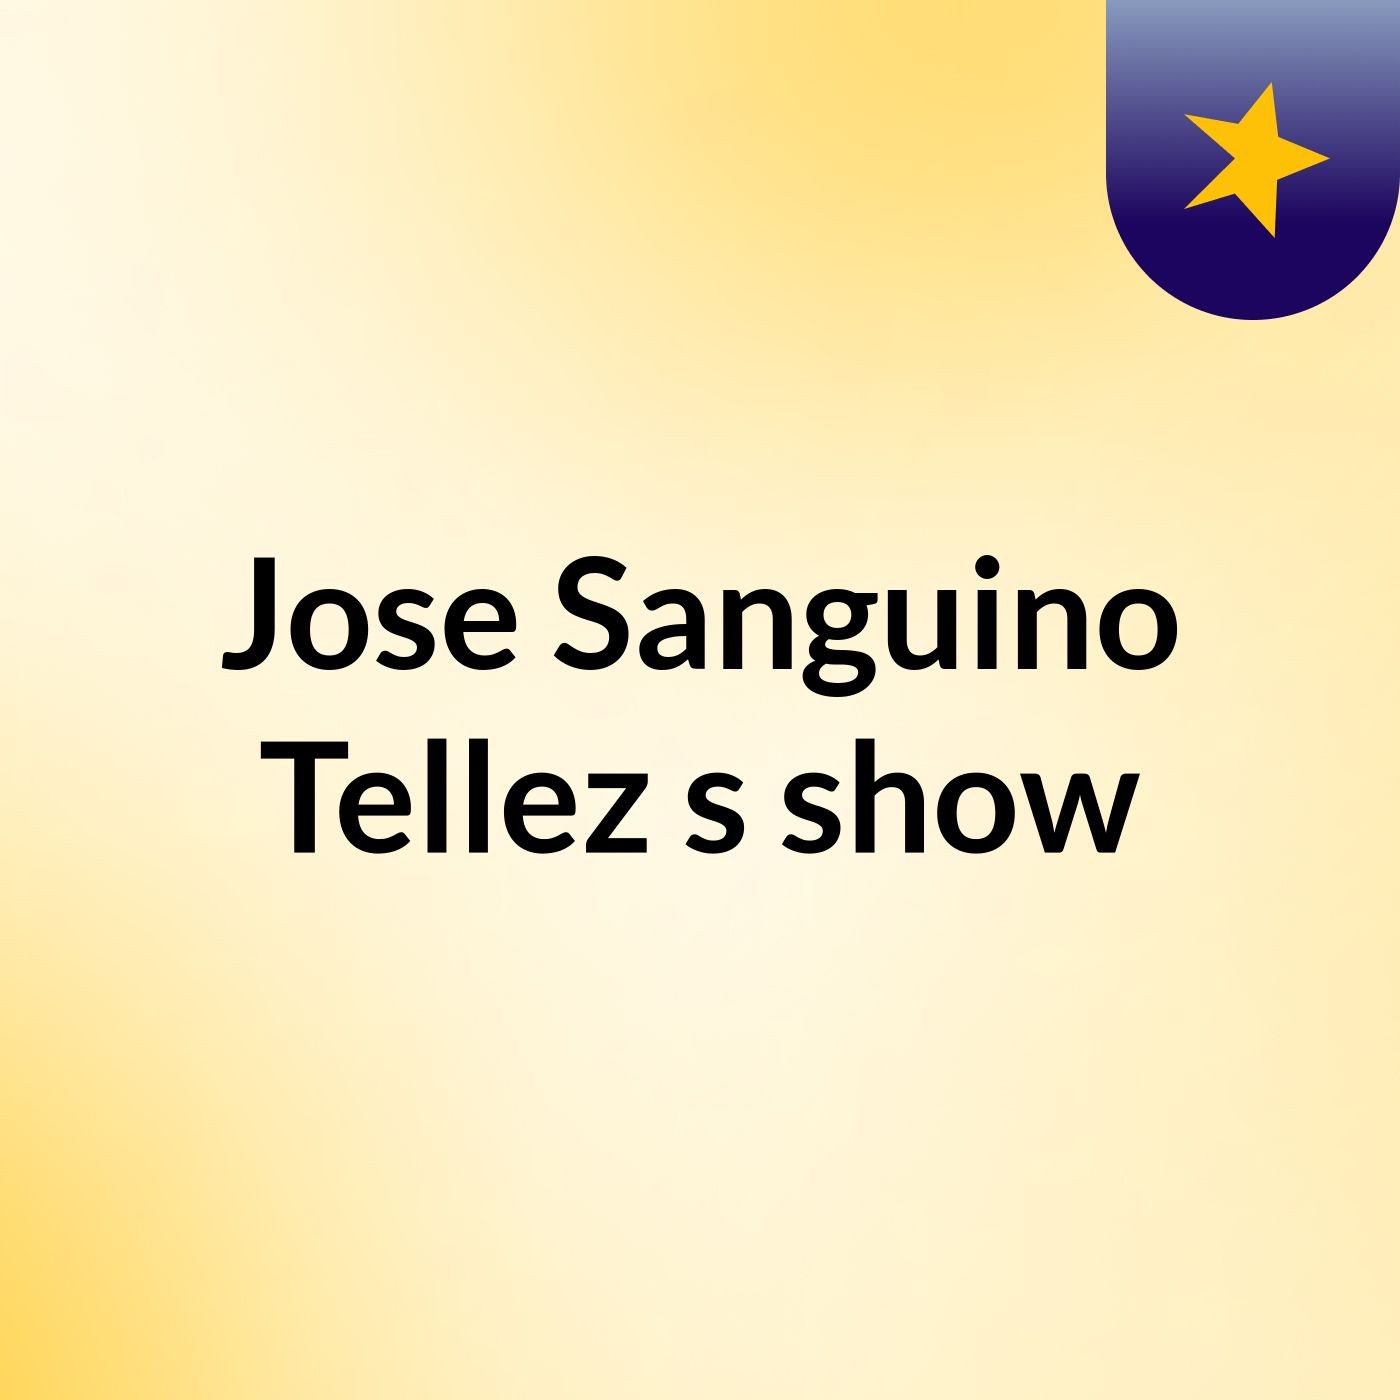 Jose Sanguino Tellez's show